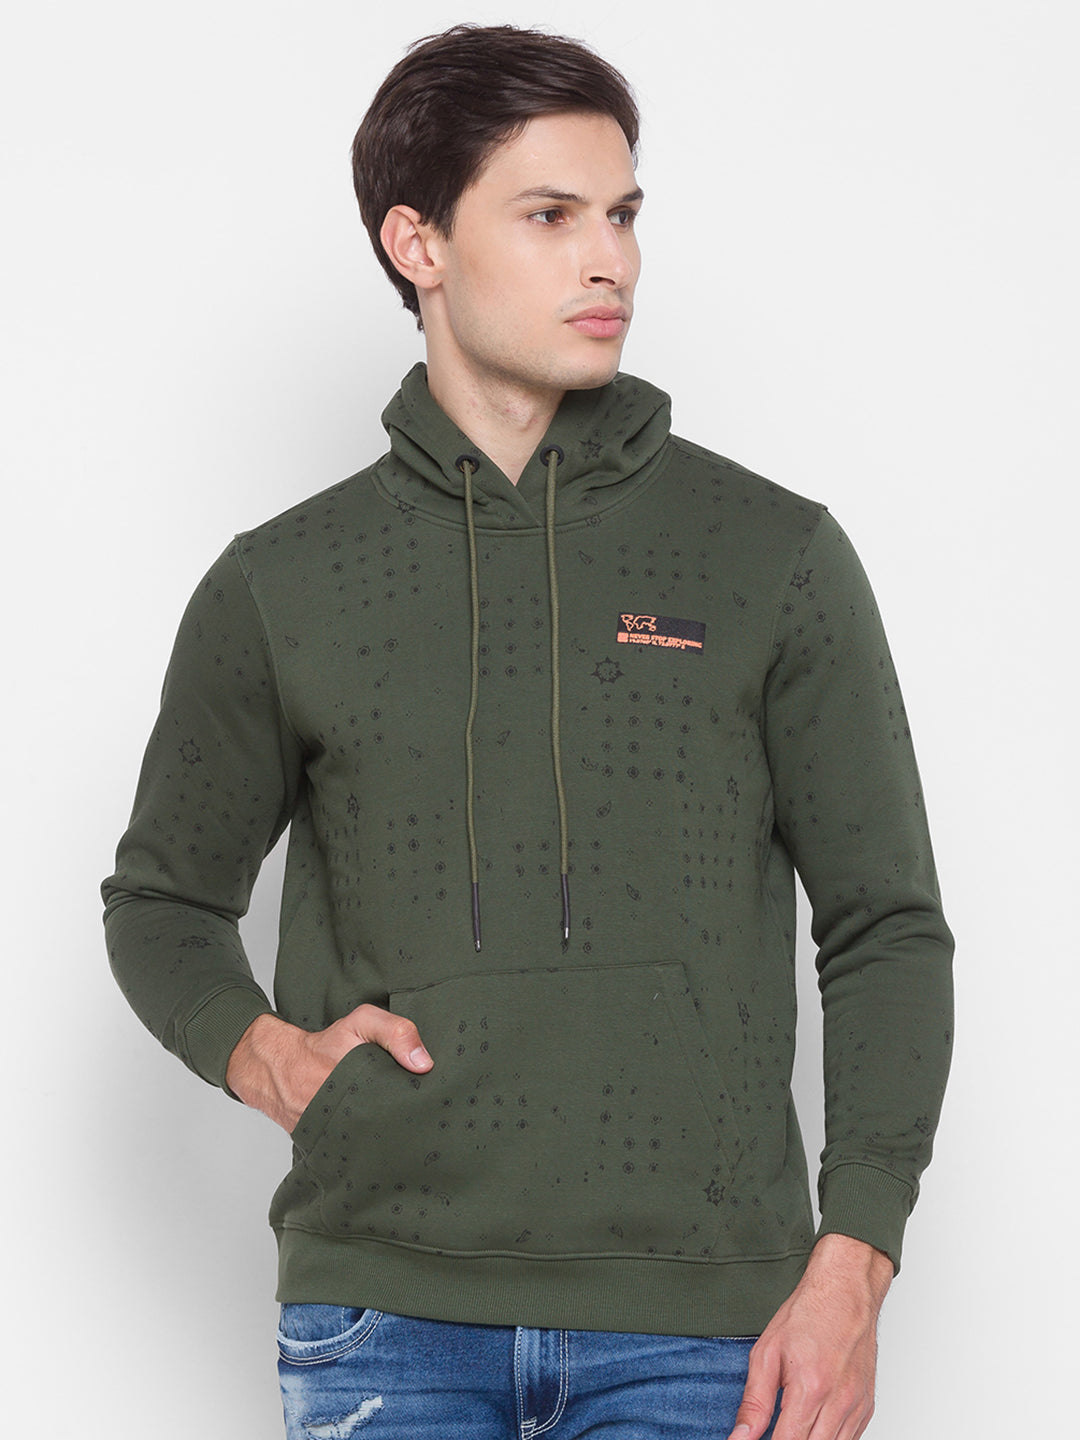 Spykar Green Cotton Sweatshirt For Men